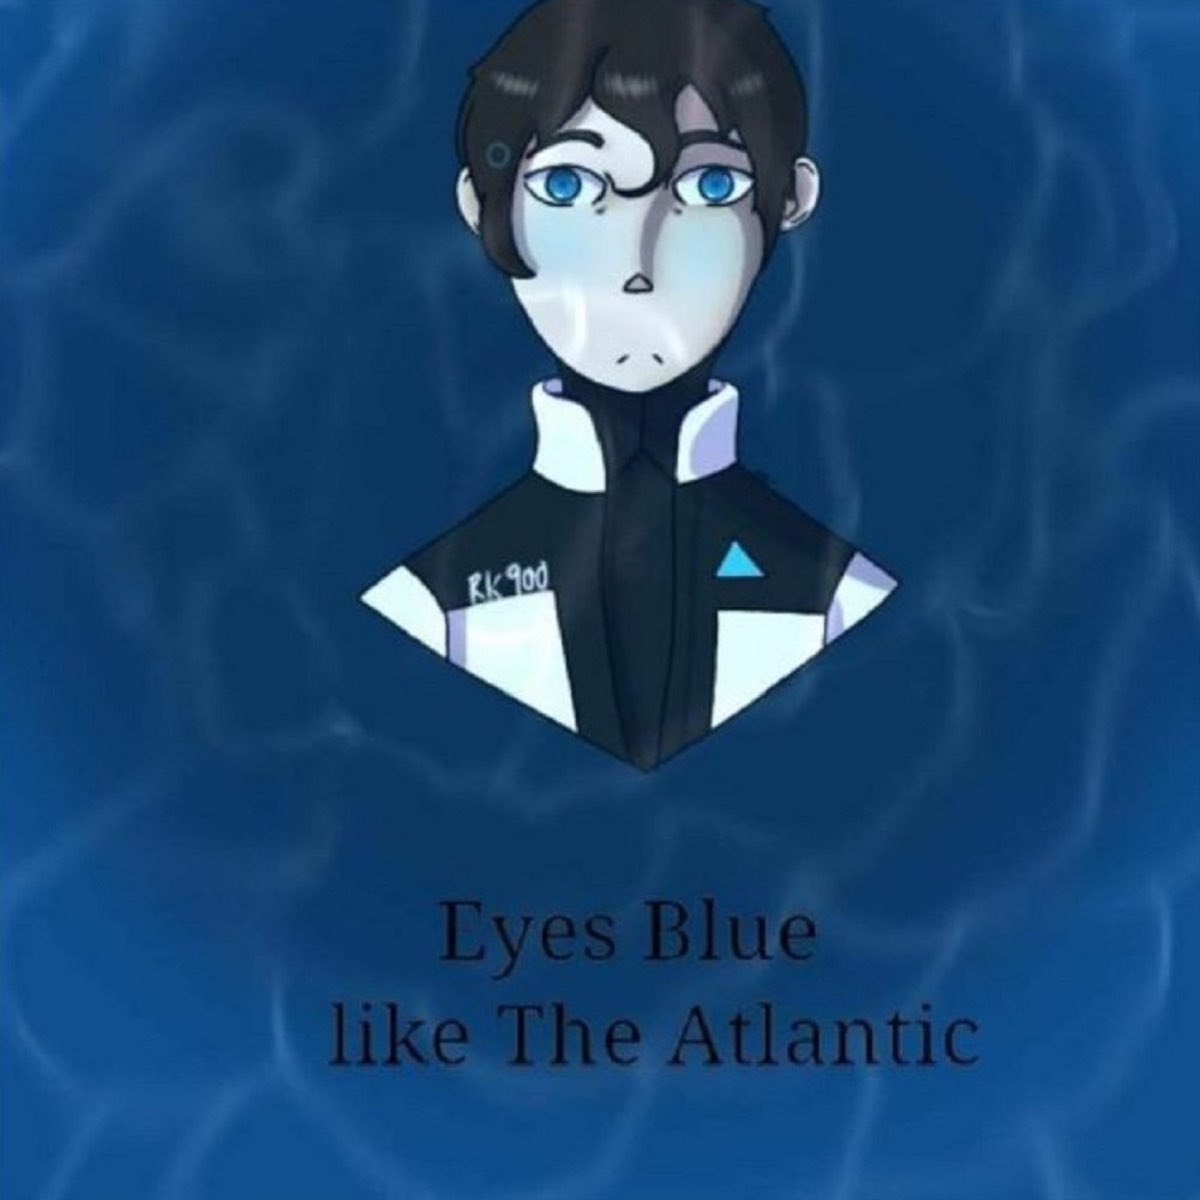 Like blue like the atlantic. Eyes Blue like the Atlantic. Айс Блу лайк зе Атлантик. Песня Eyes Blue like. Песня Ice Blue like the Atlantic.